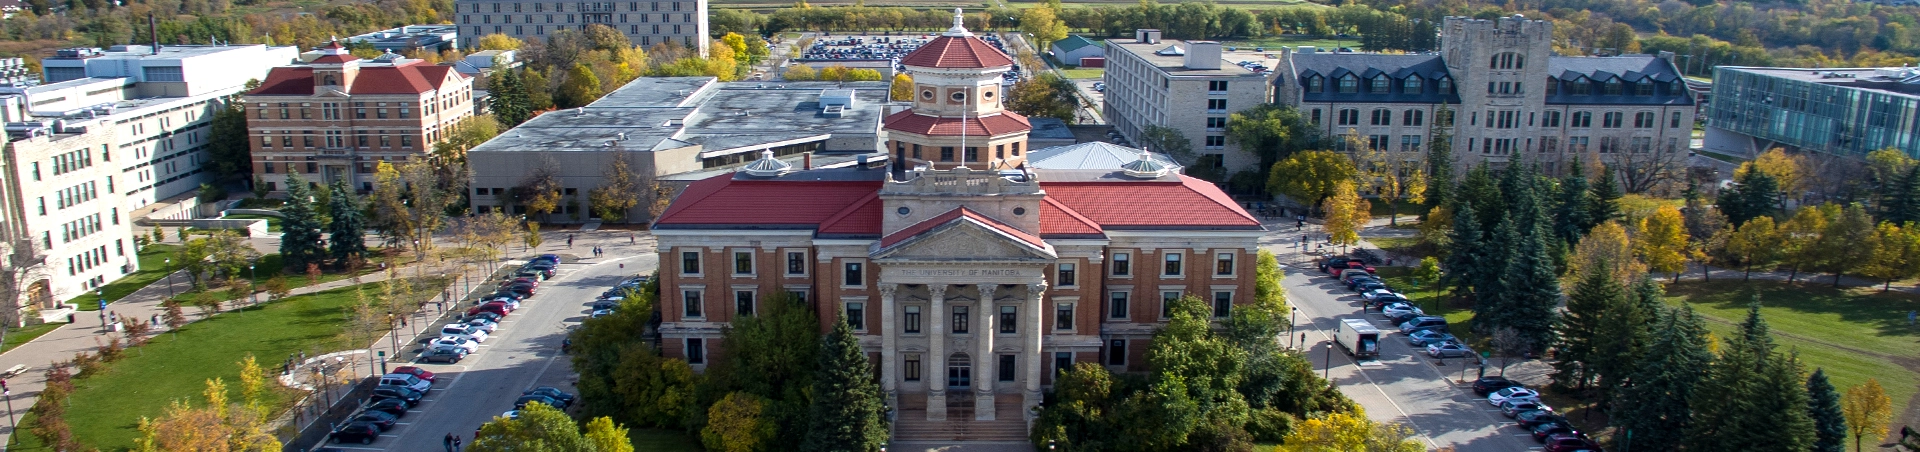 University of Manitoba Campus